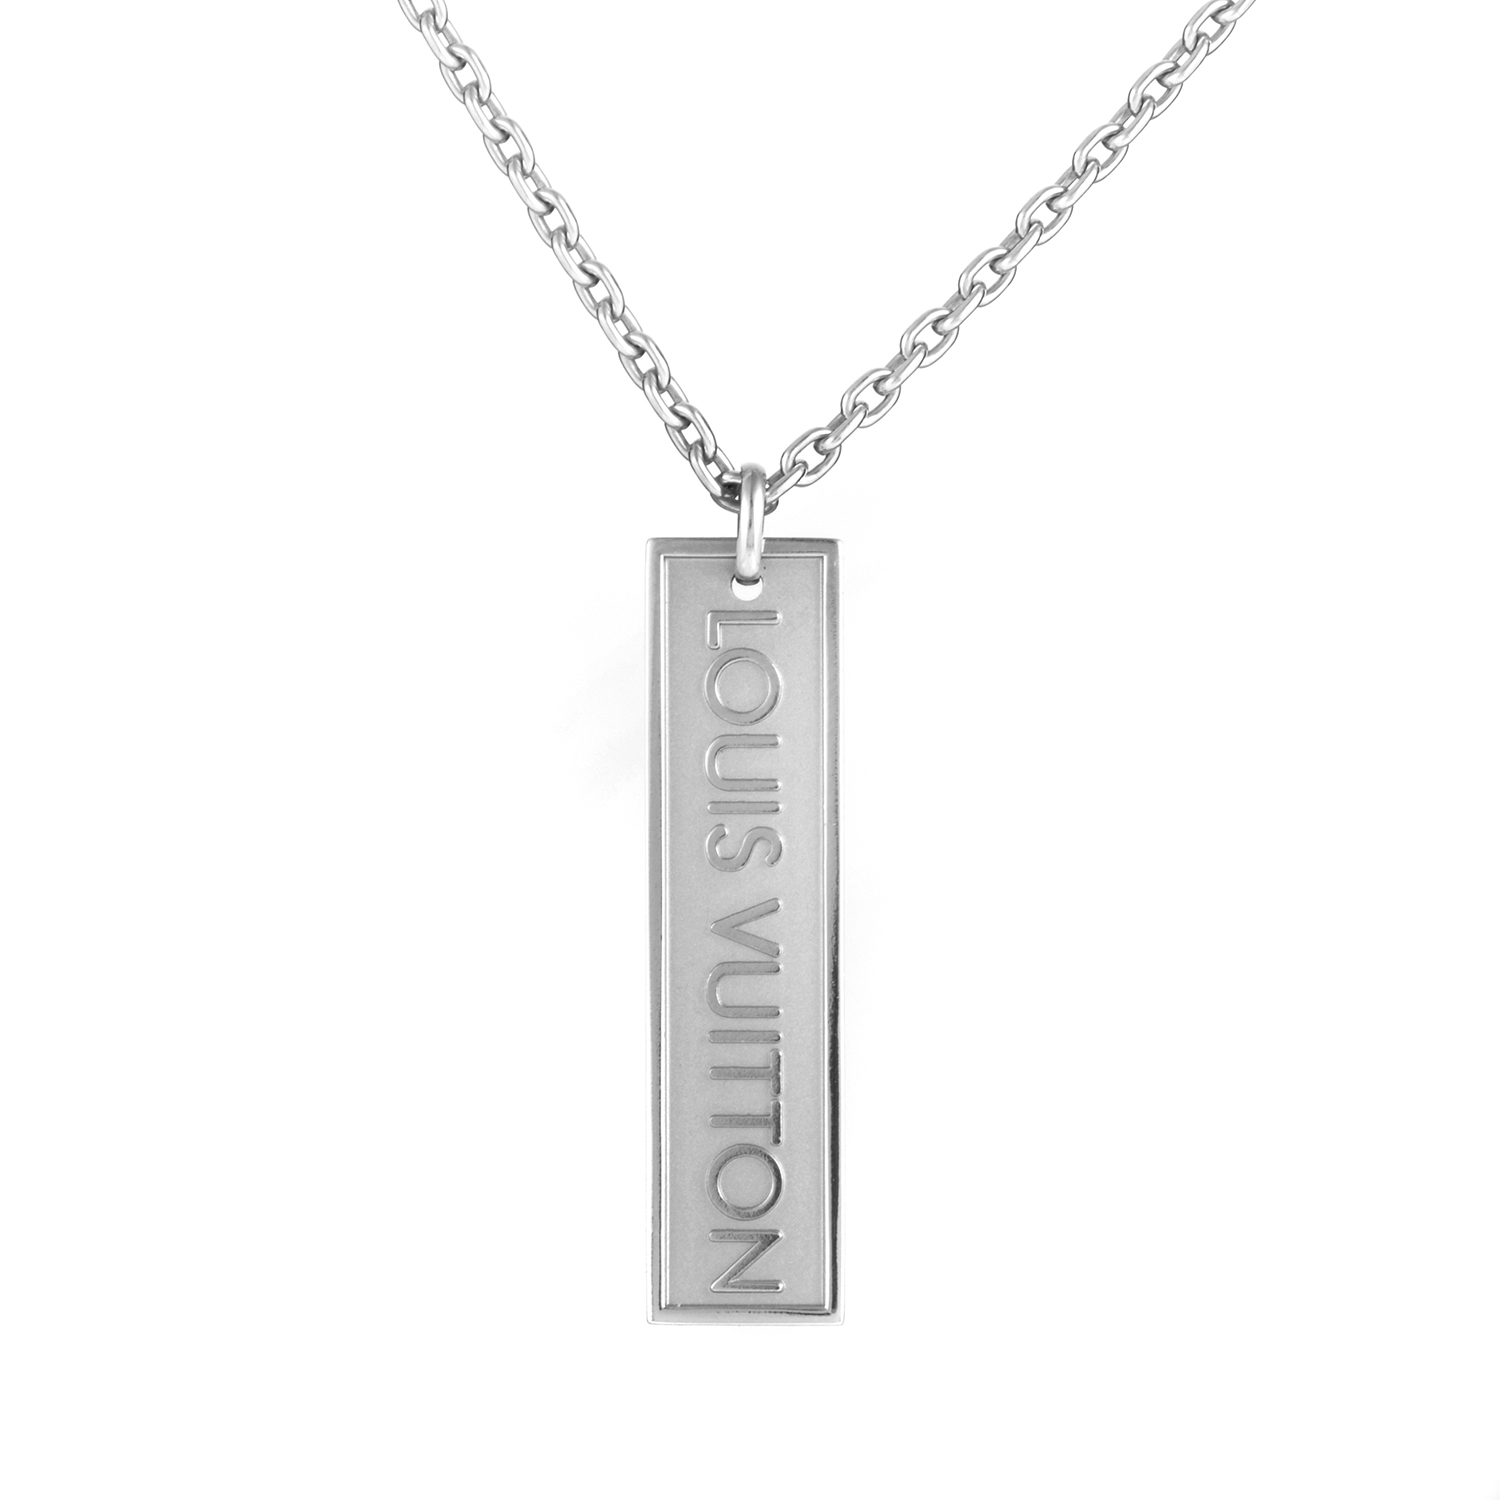 Louis Vuitton 18K White Gold Pendant Necklace | eBay